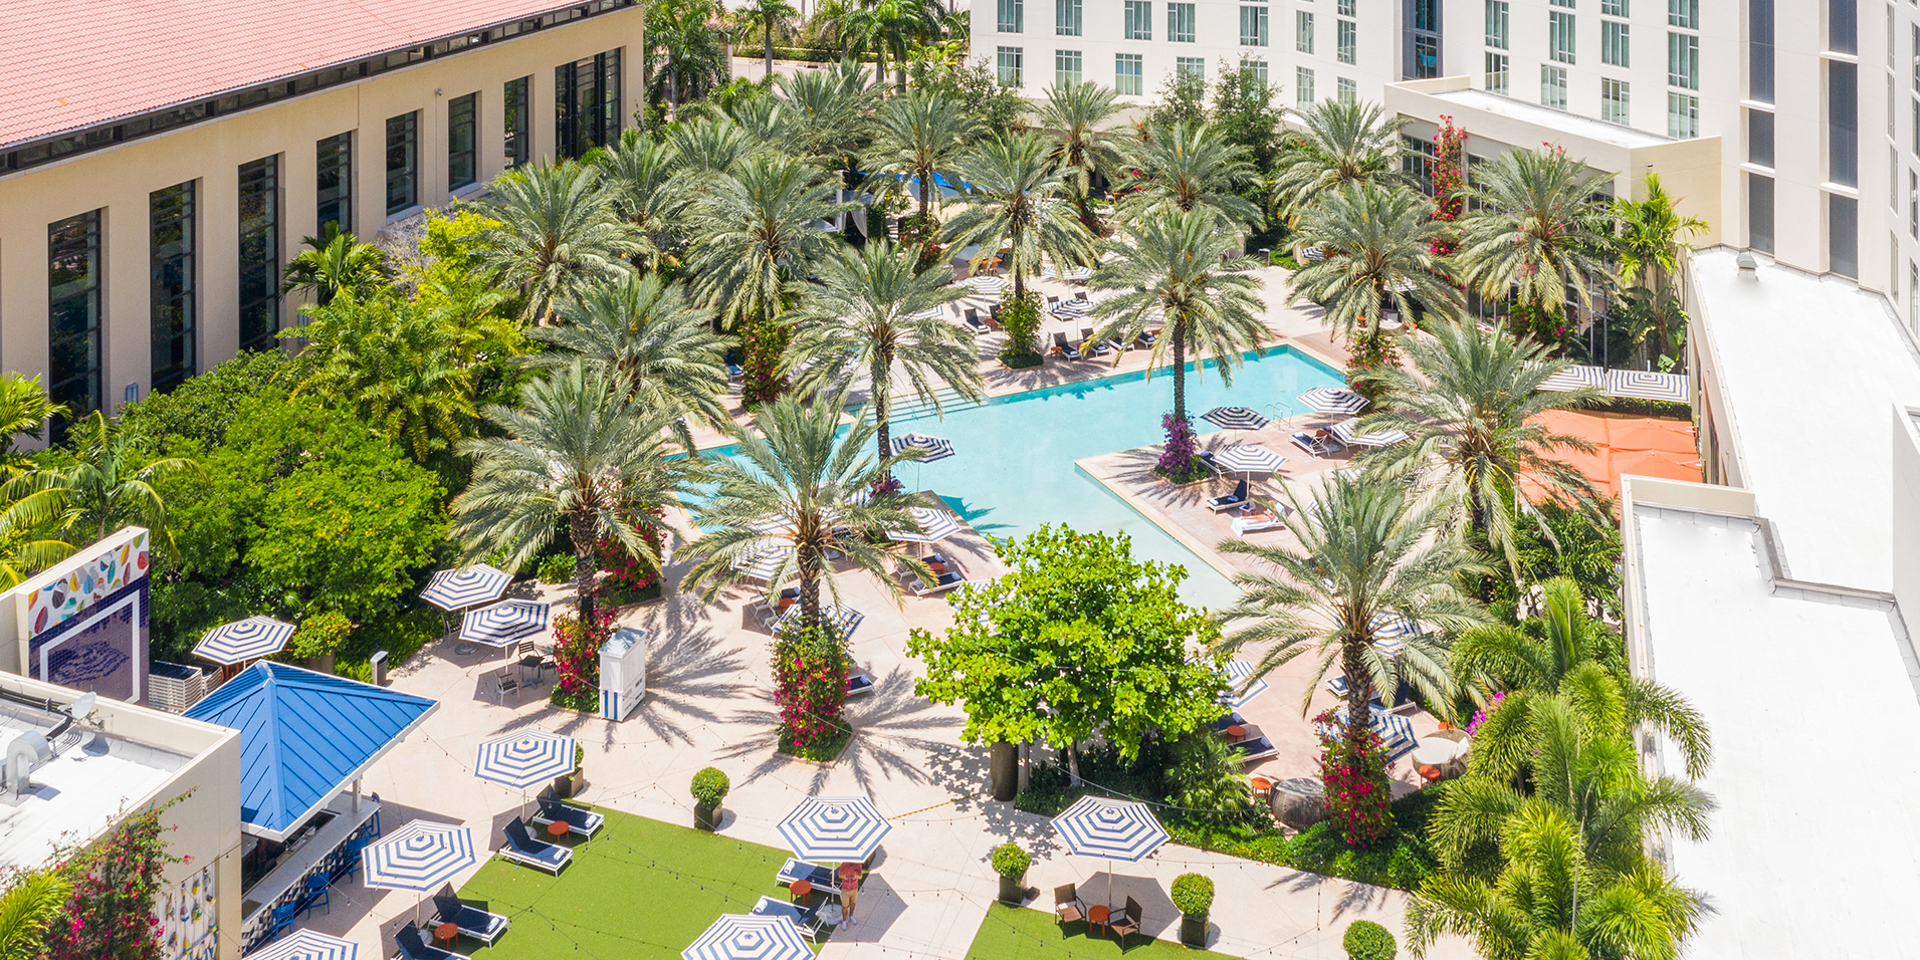 Hilton West Palm Beach pool aerial